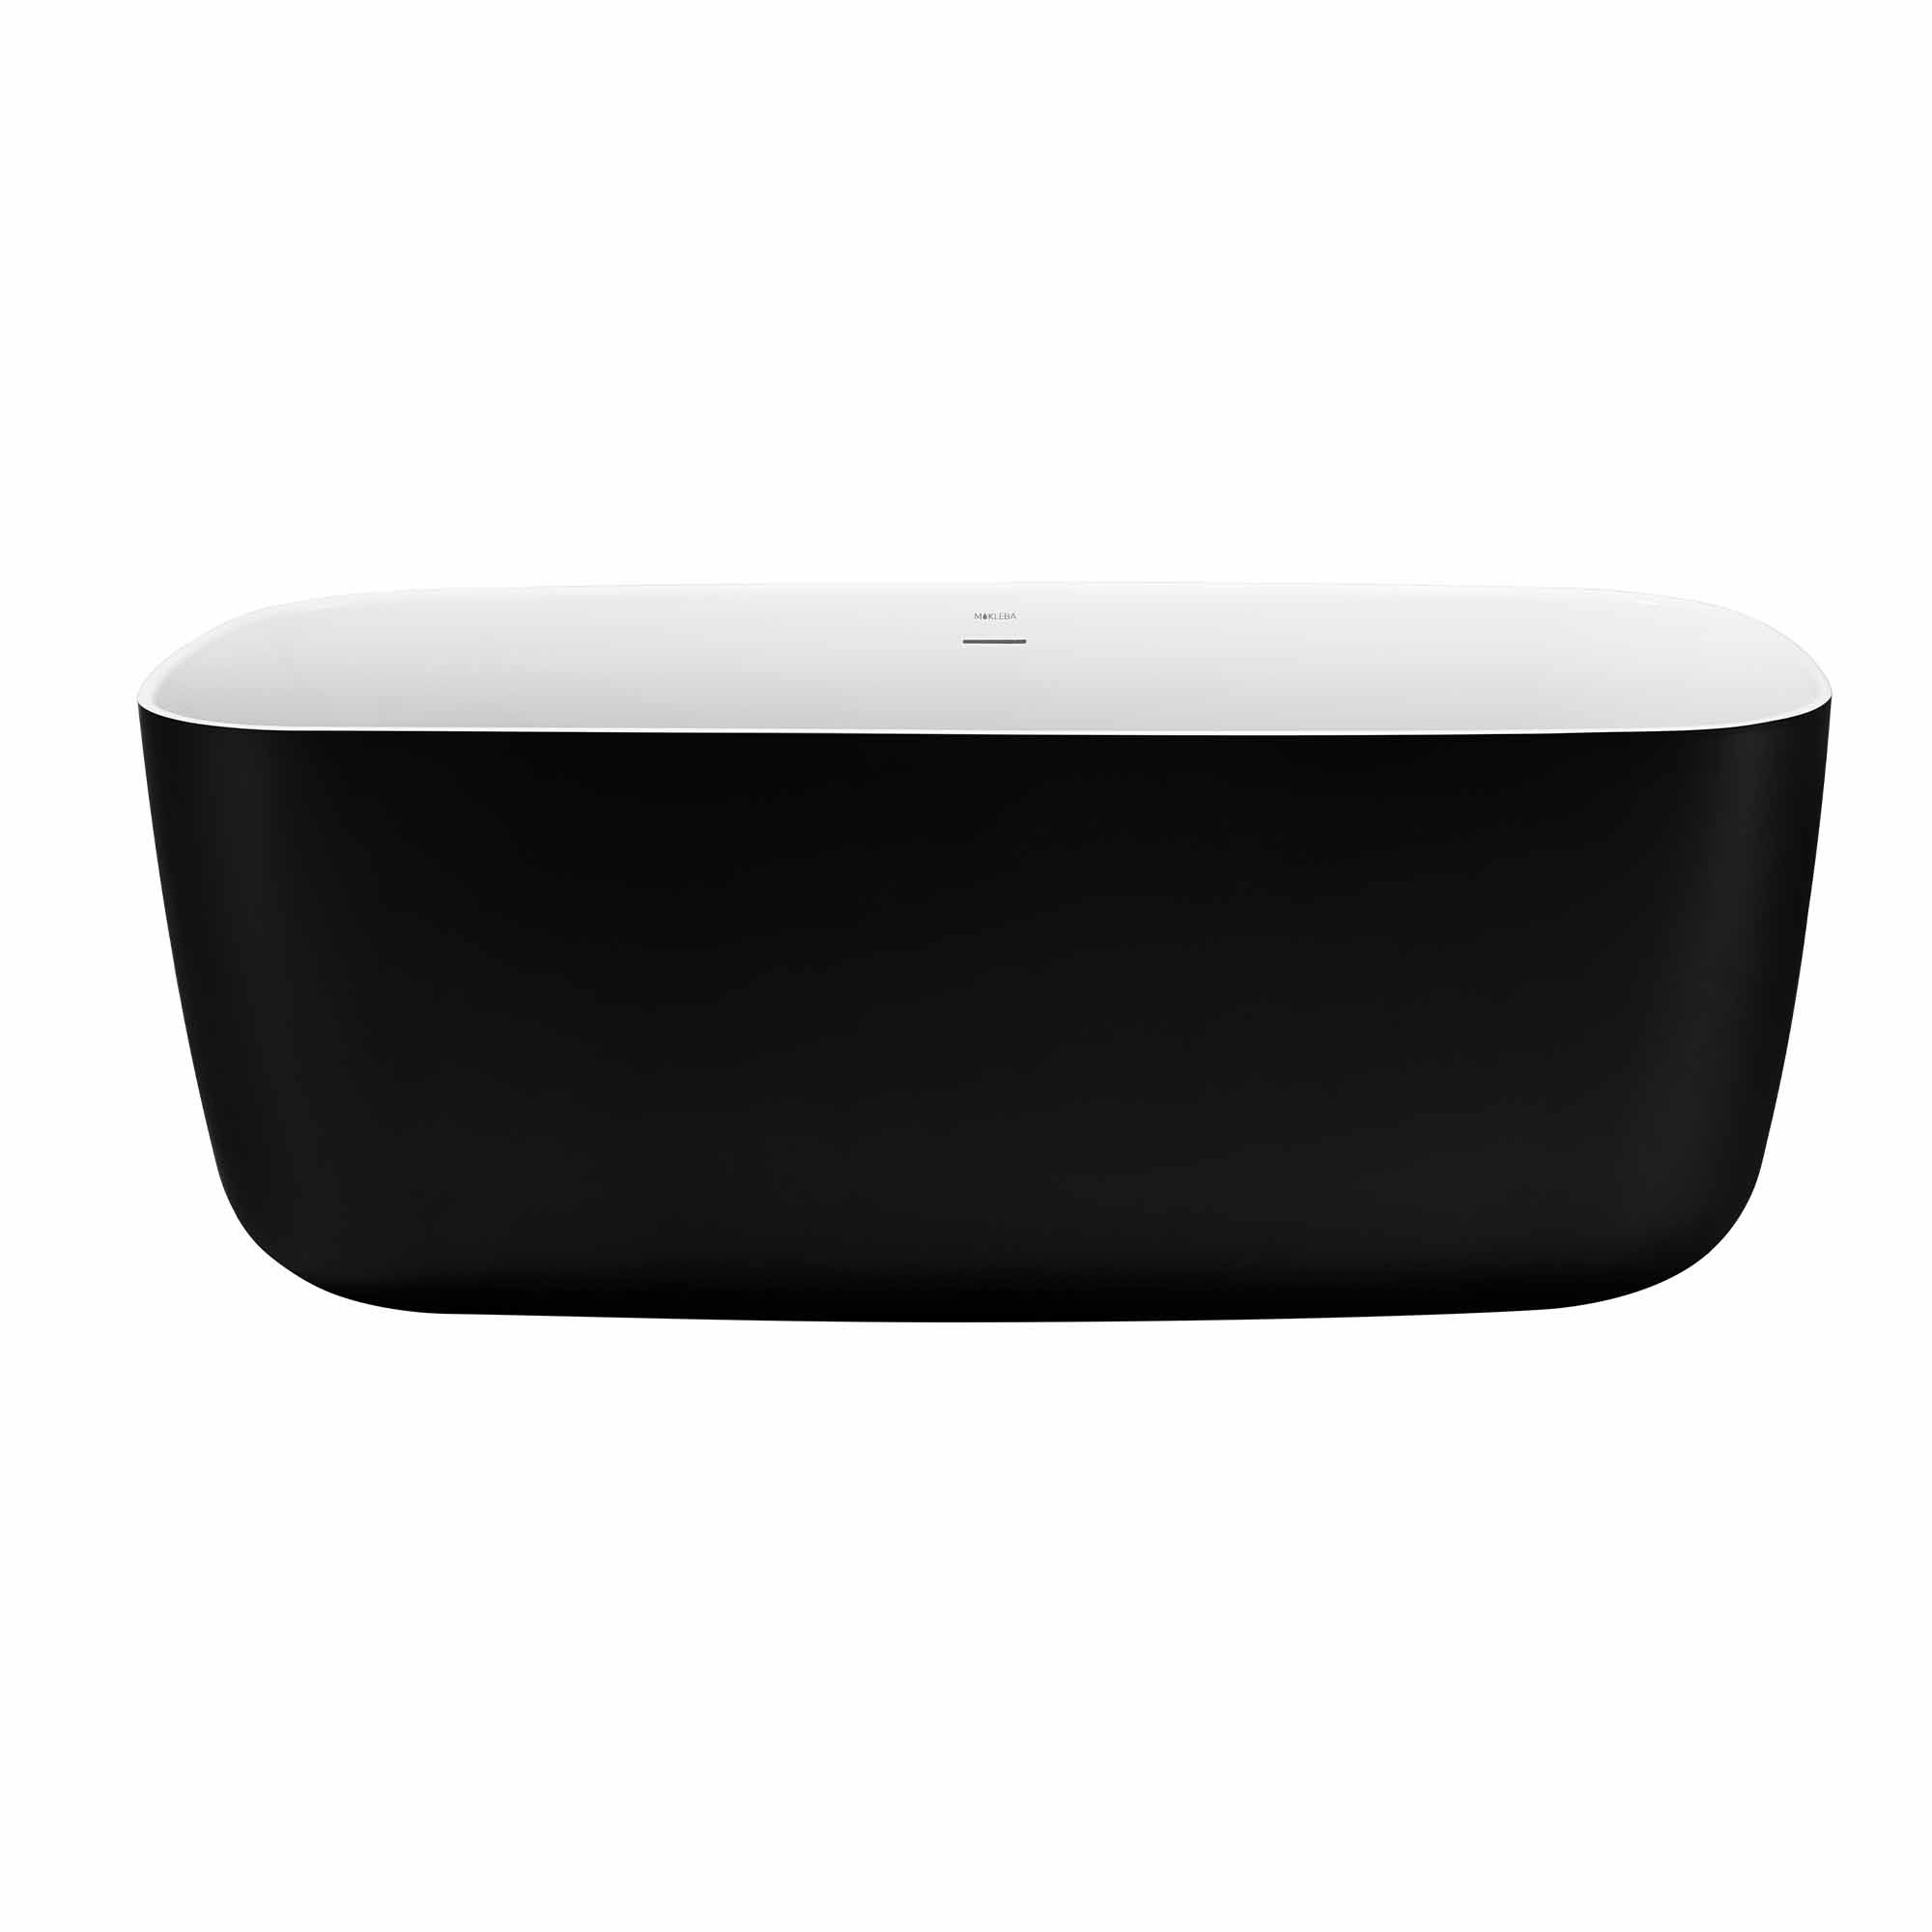 59 inch Acrylic Freestanding Bathtub Contemporary Soaking Tub white inside black outside